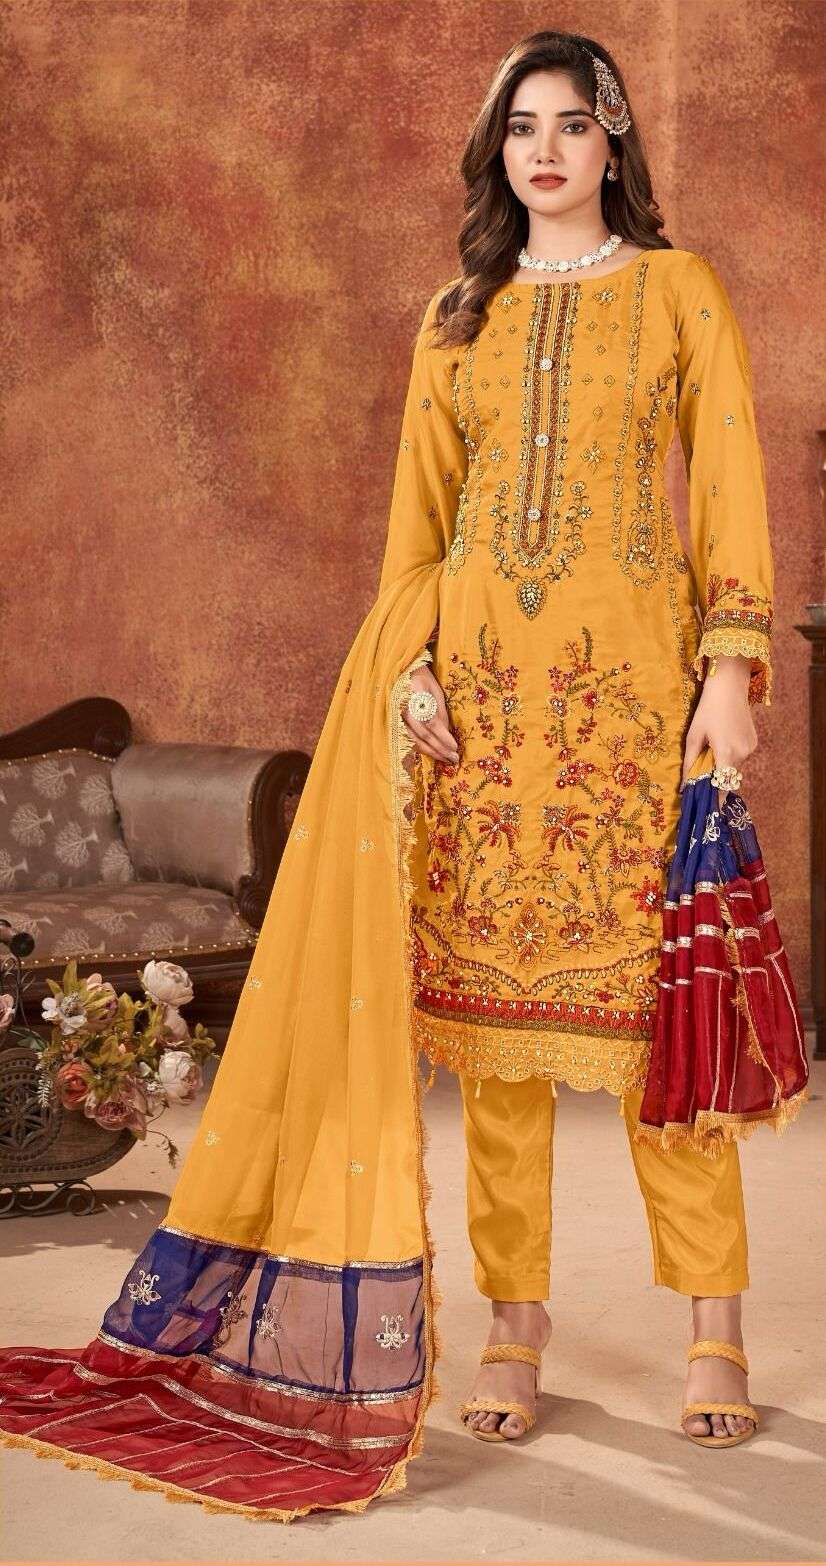 Bilqis B 15 Organza Embroidered Pakistani Suits Wholesale catalog